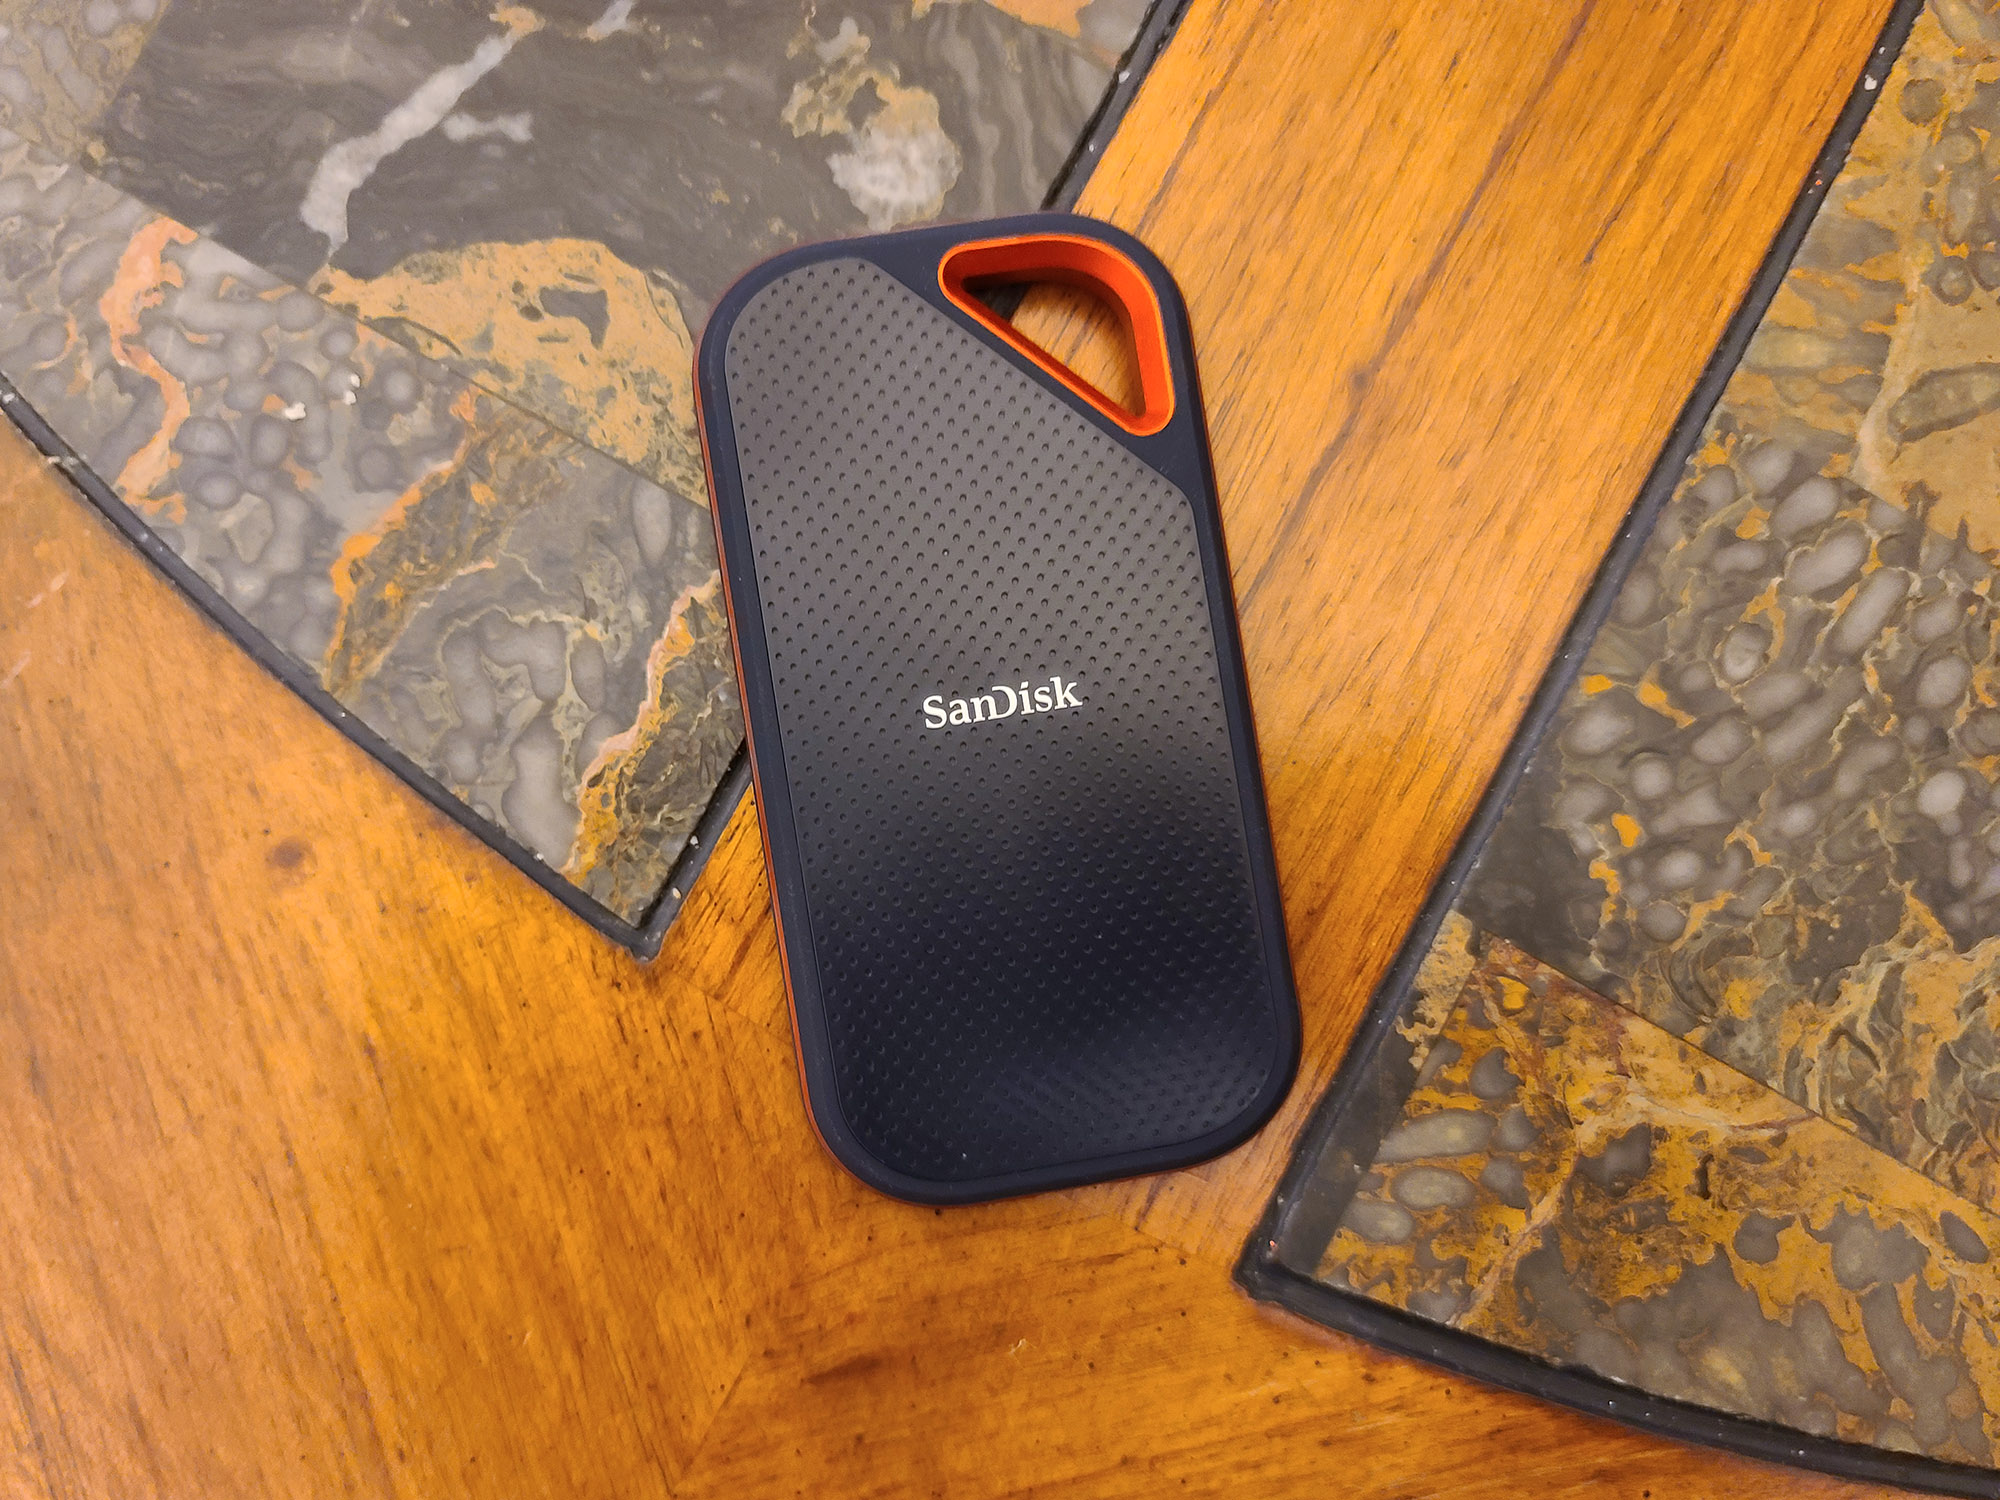 Best external hard drives: SanDisk Extreme Pro Portable SSD (1TB)